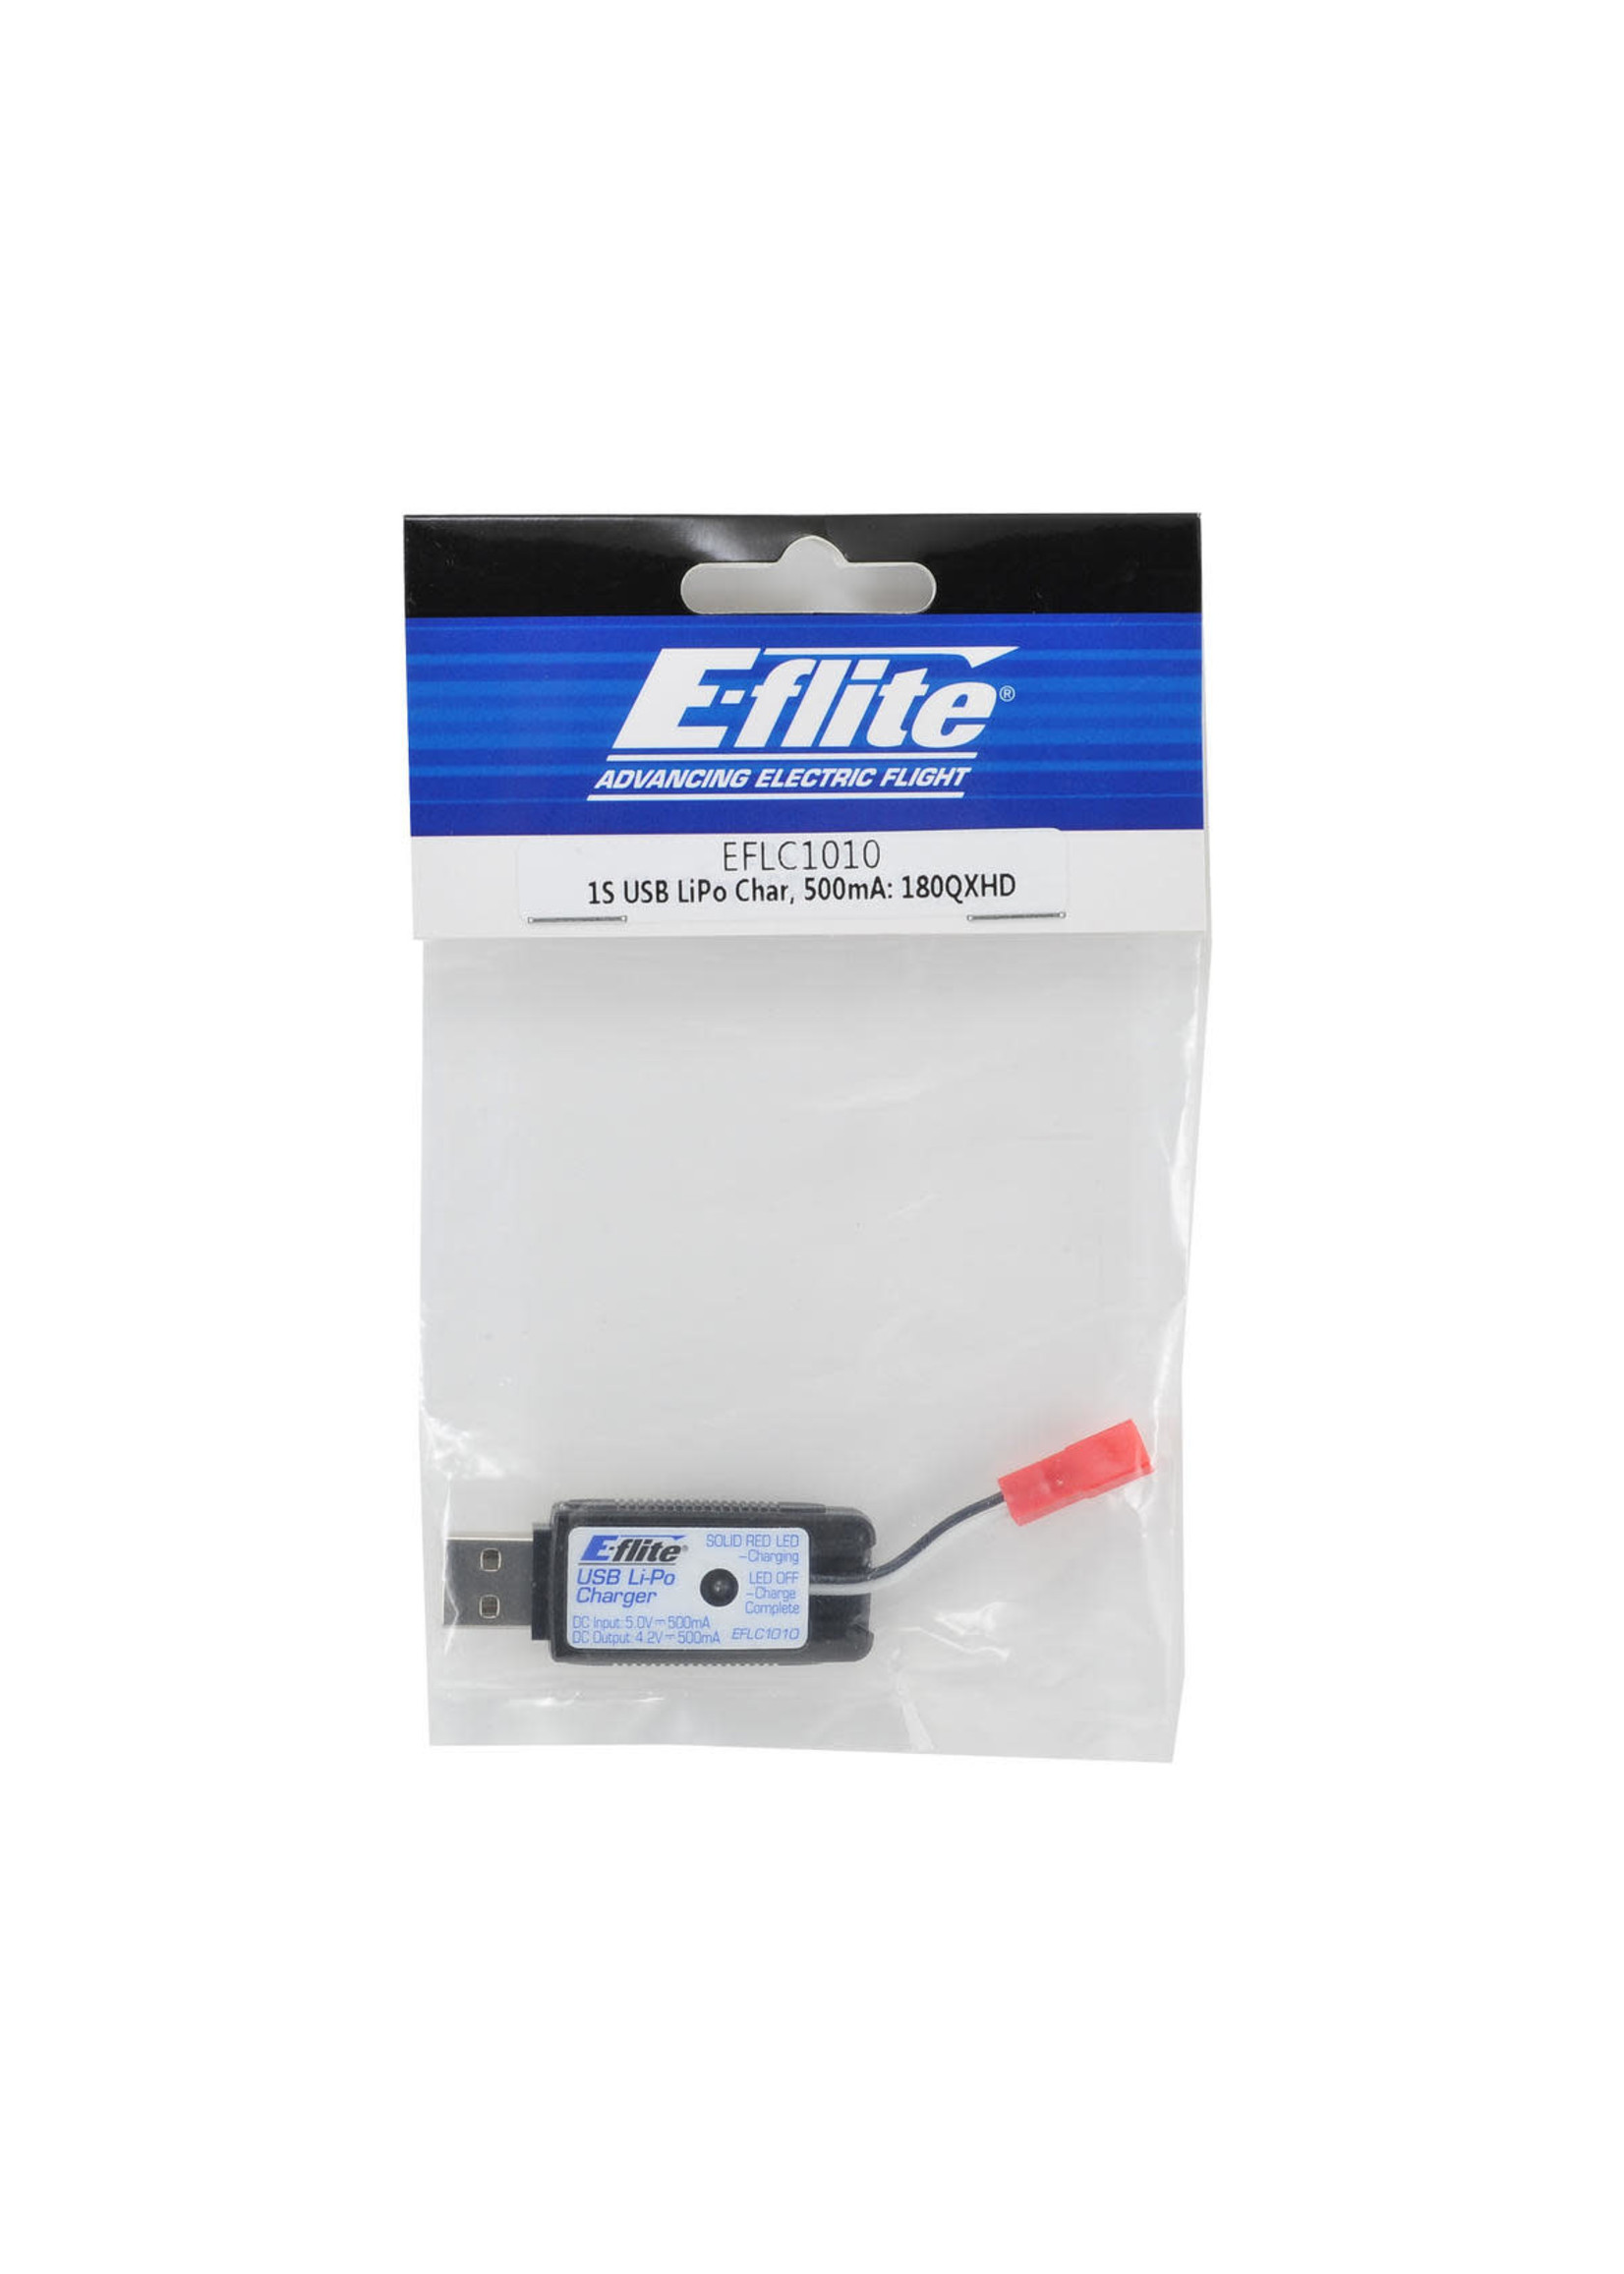 E-Flite EFLC1010 1S USB Li-Po Charger, 500mA, JST: 180 QX HD